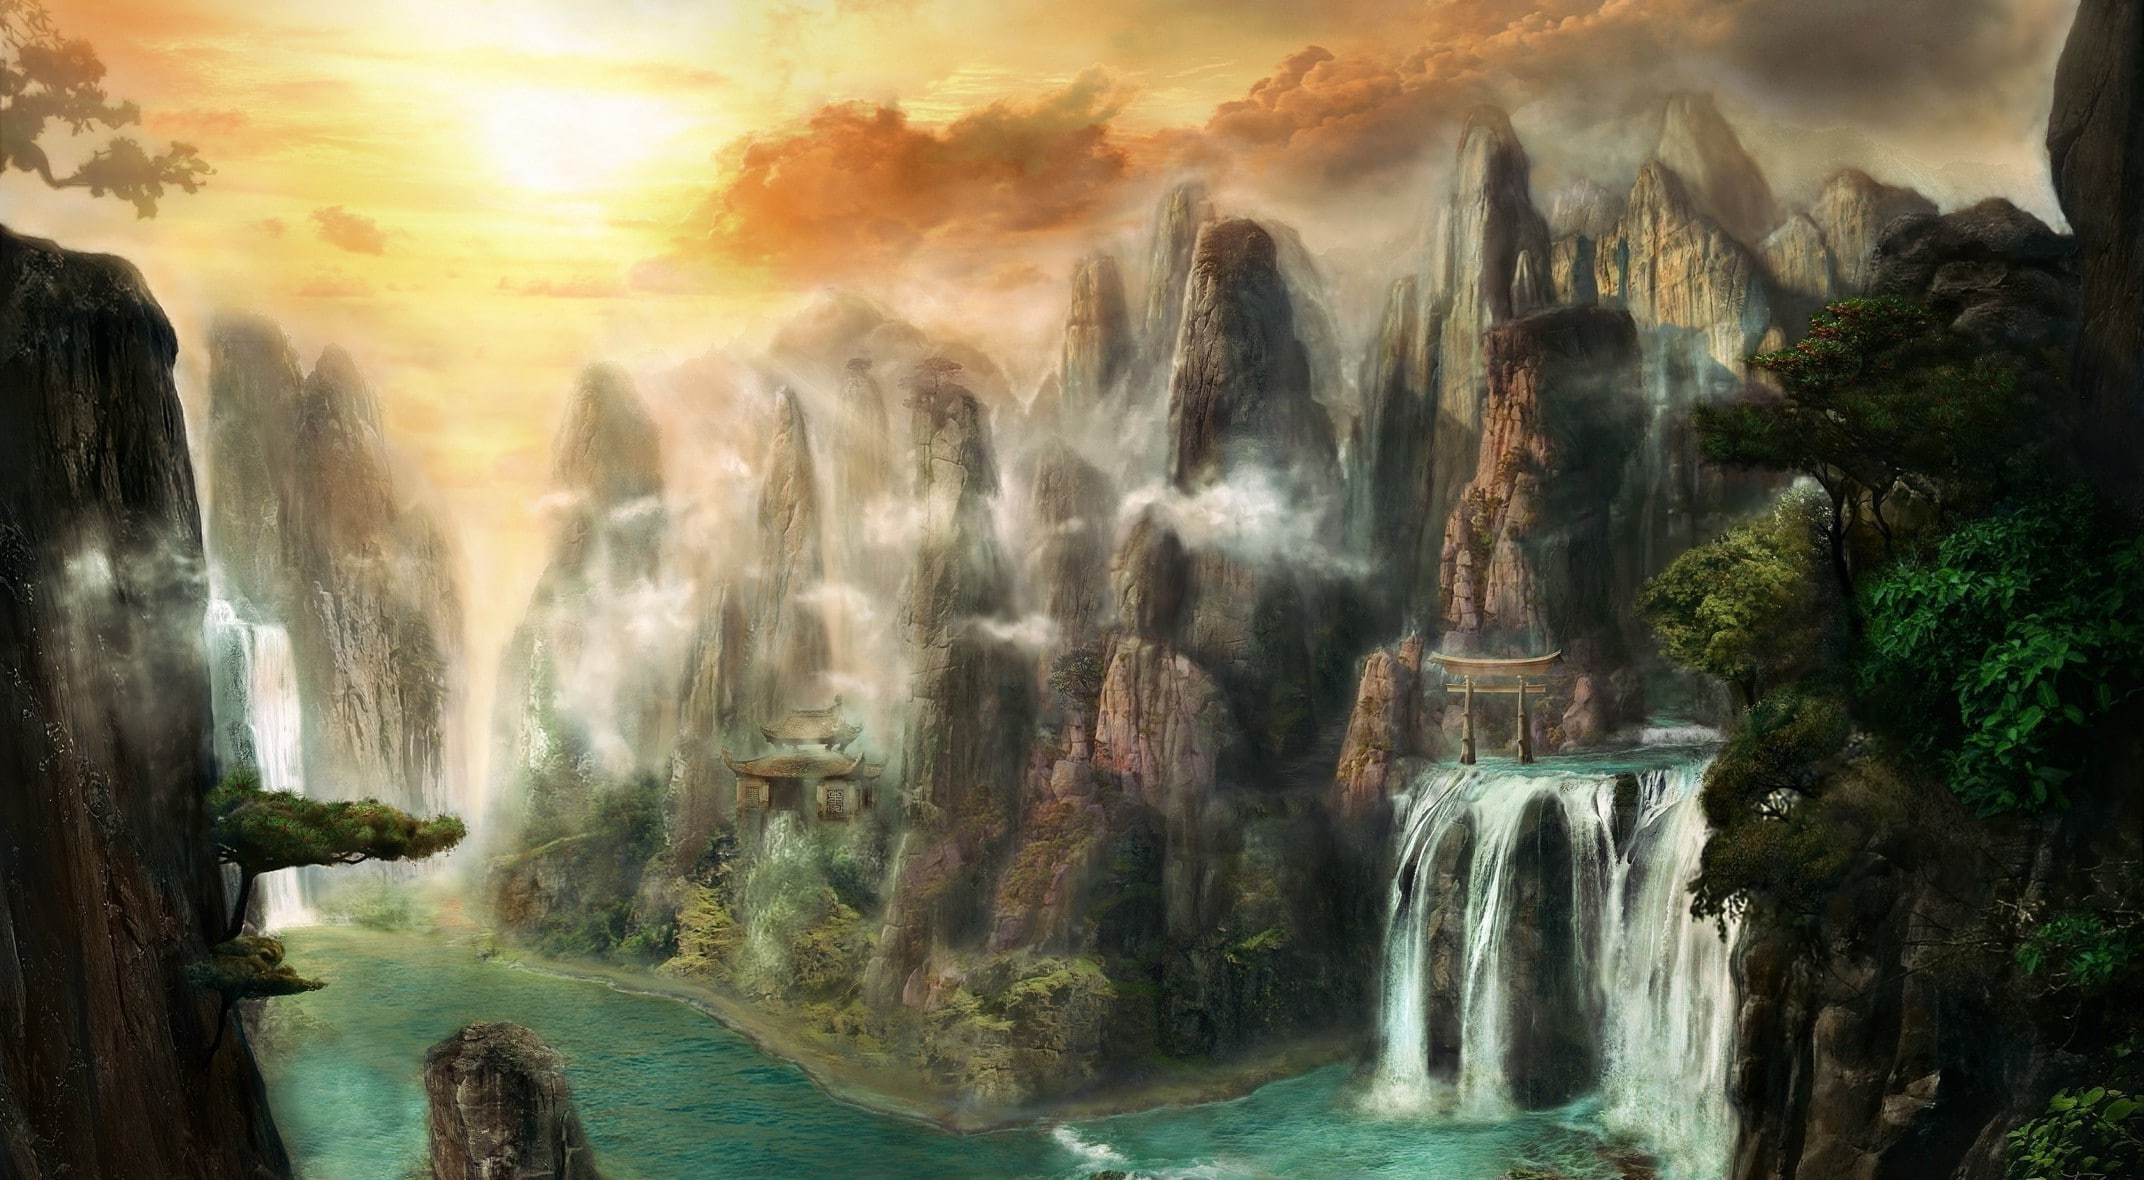 digital art fantasy art nature mountain landscape waterfall trees asian architecture river sun clouds mist